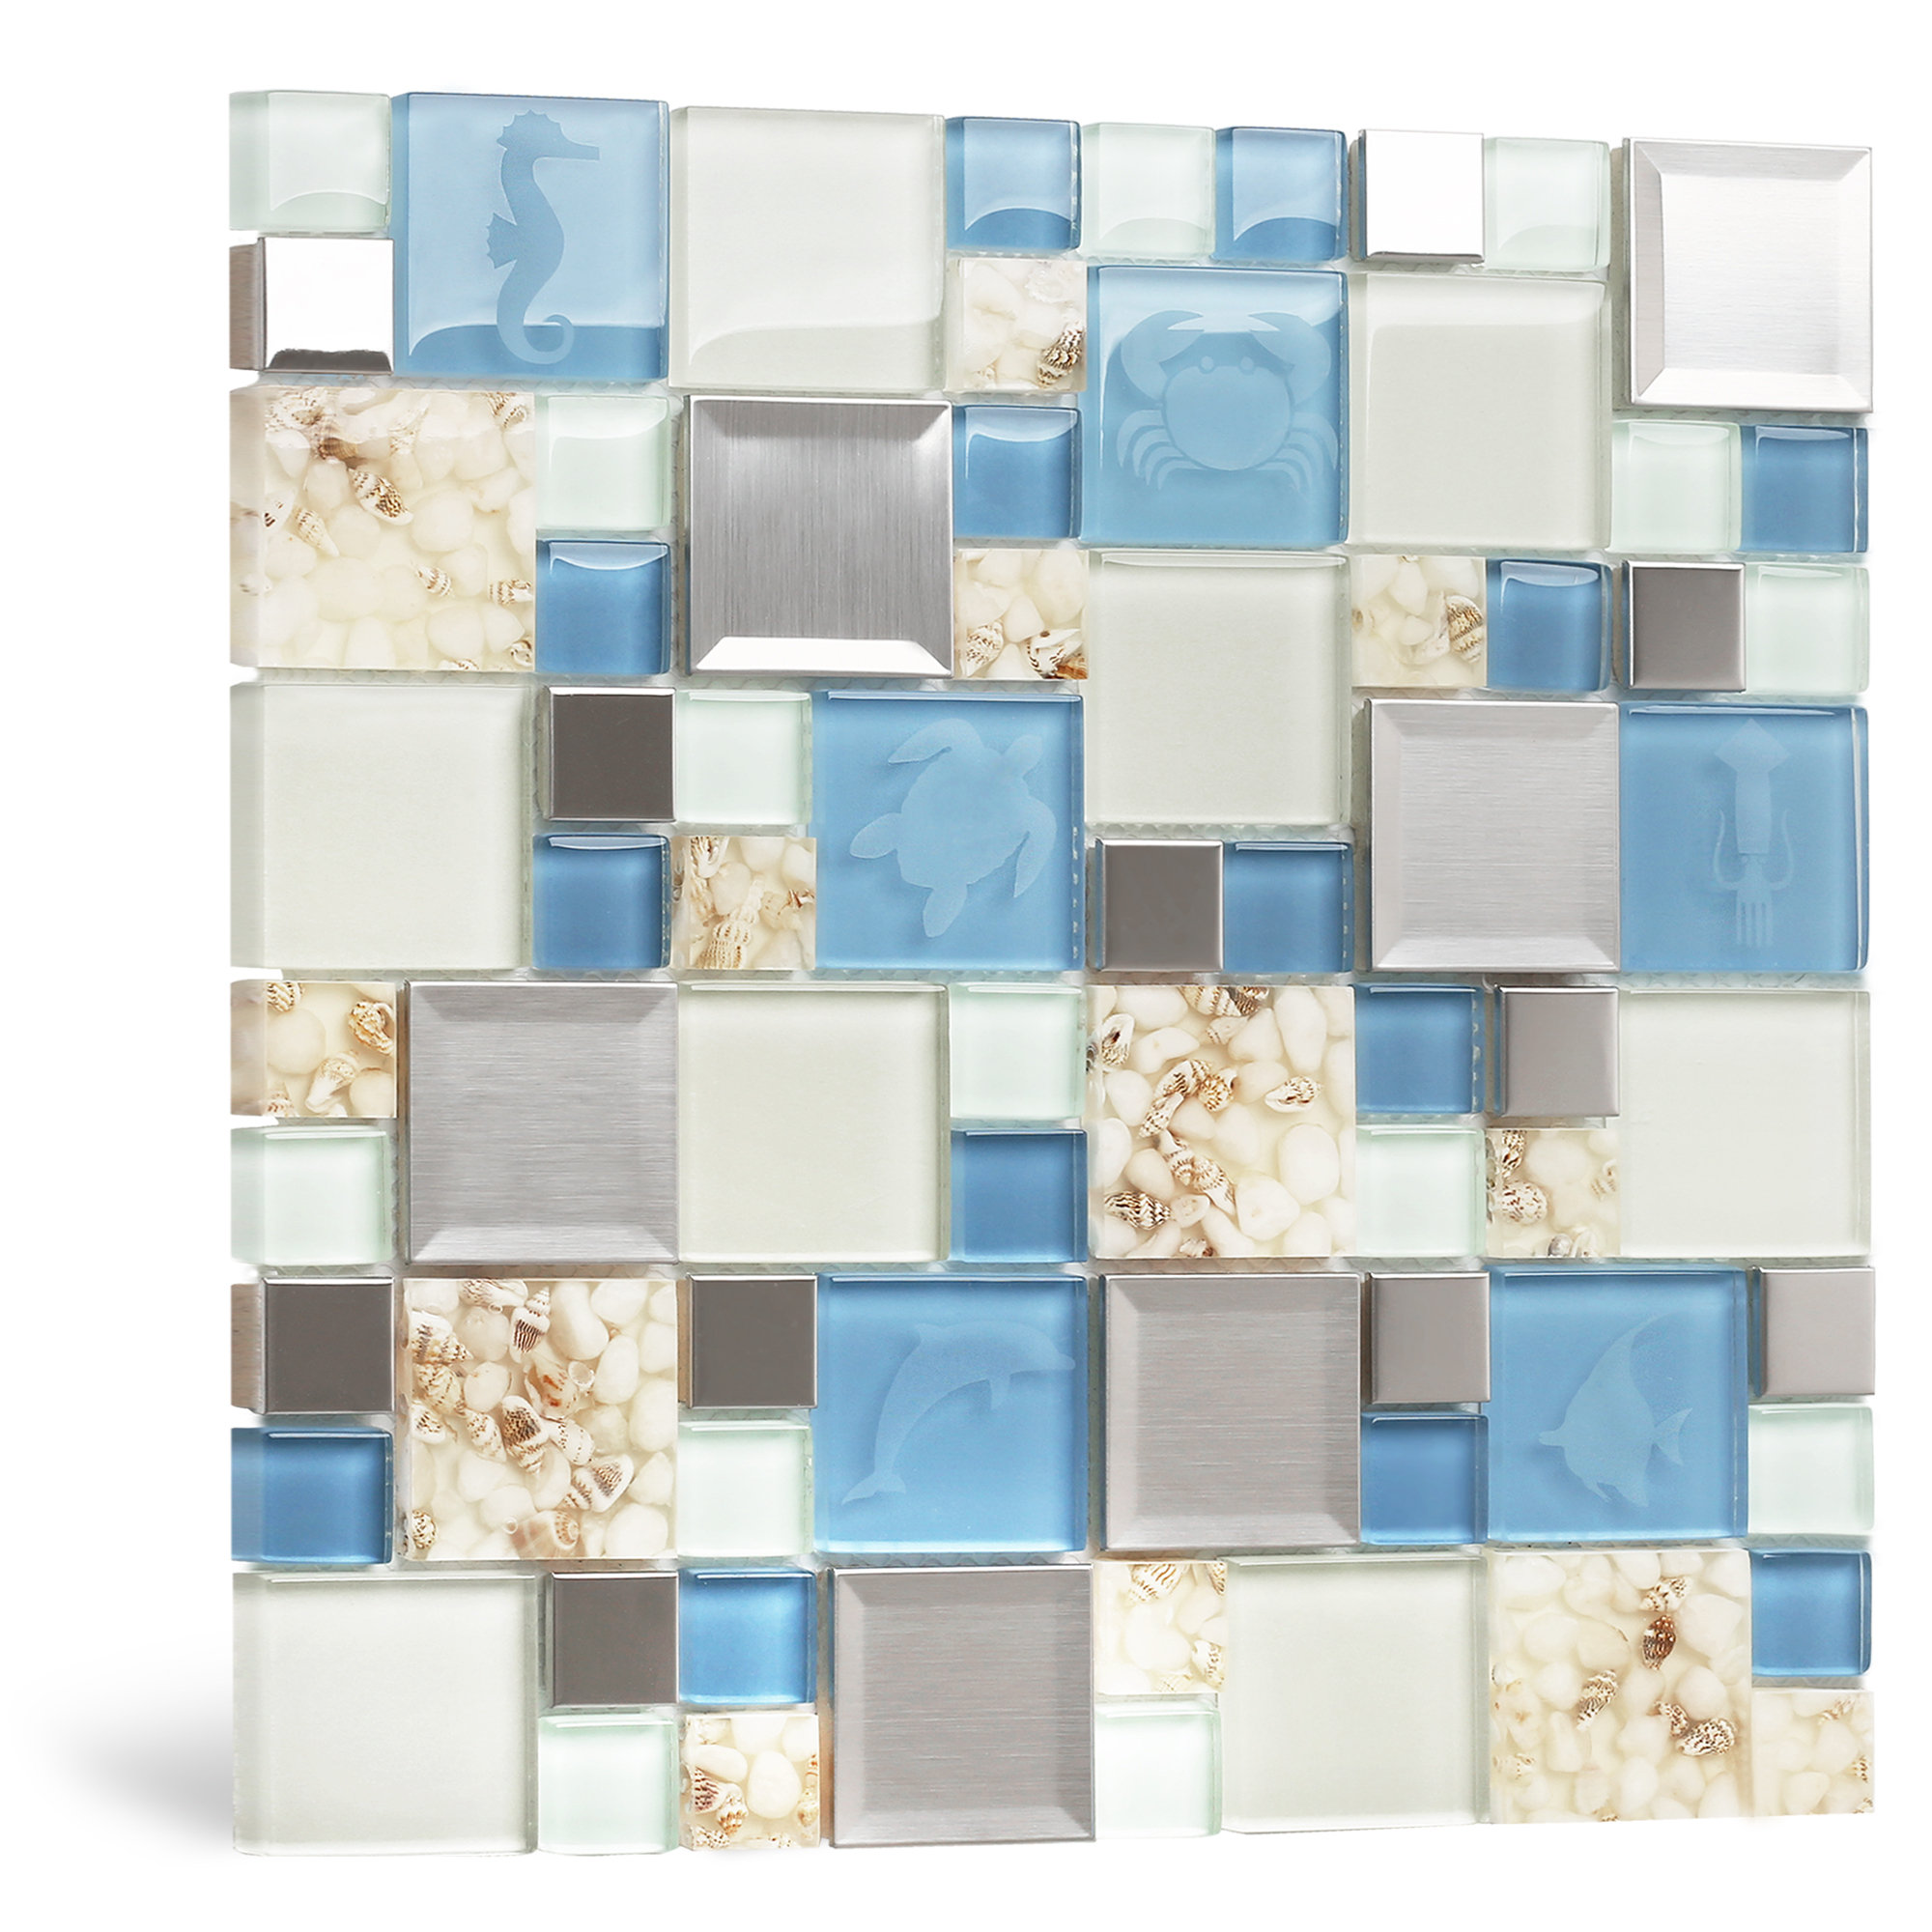 Uxcell Mosaic Tiles Glass Tiles 1 x 1cm for DIY Crafts,  50Pack(50g,Fluorescent Blue) 